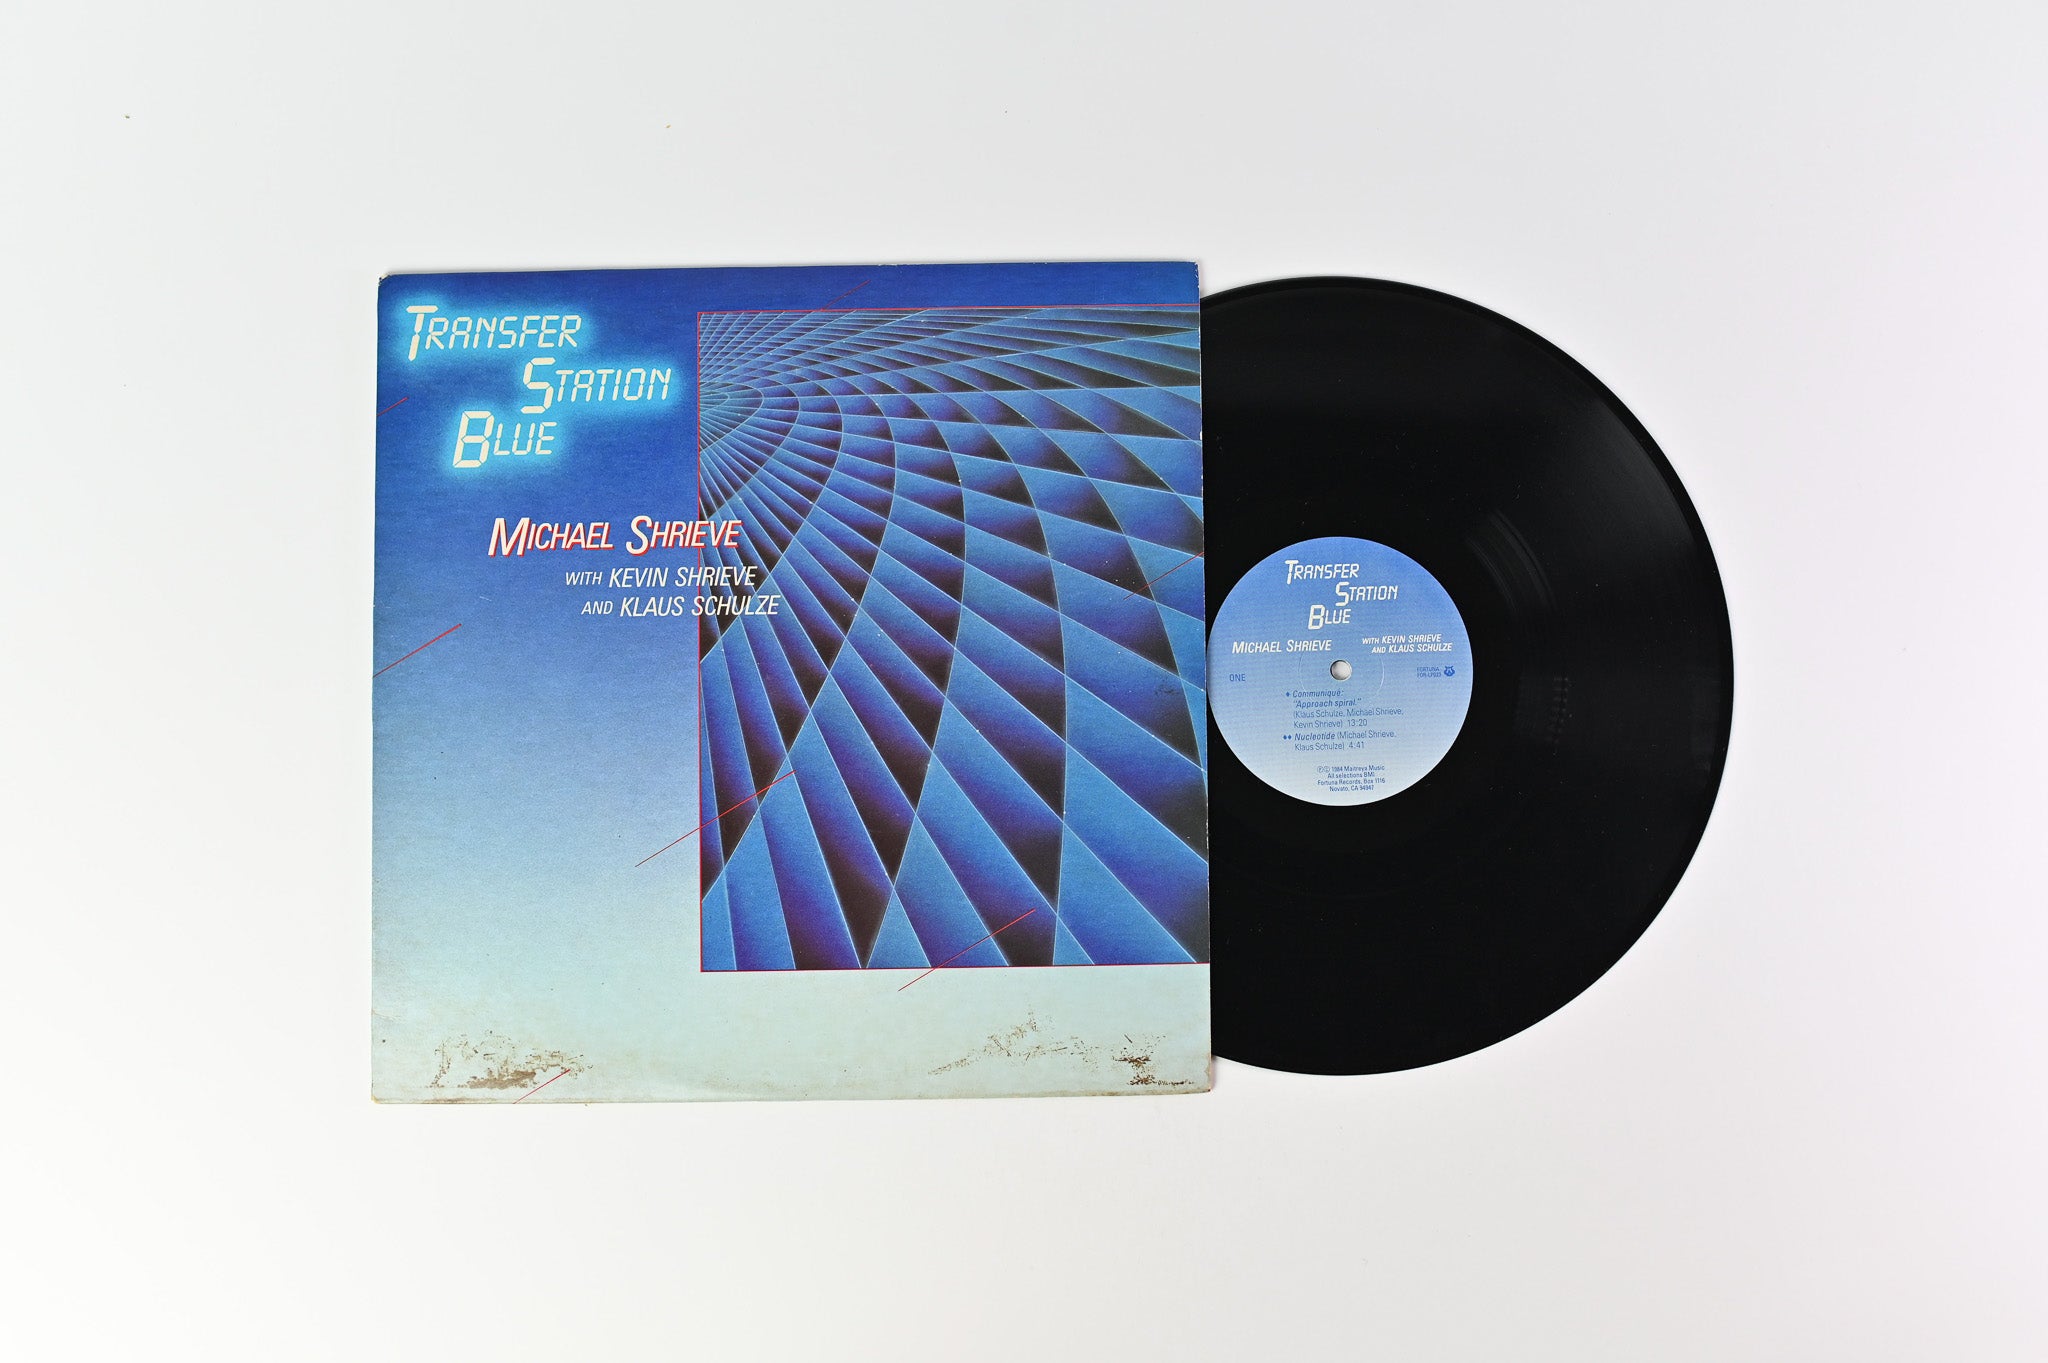 Michael Shrieve - Transfer Station Blue on Fortuna Records